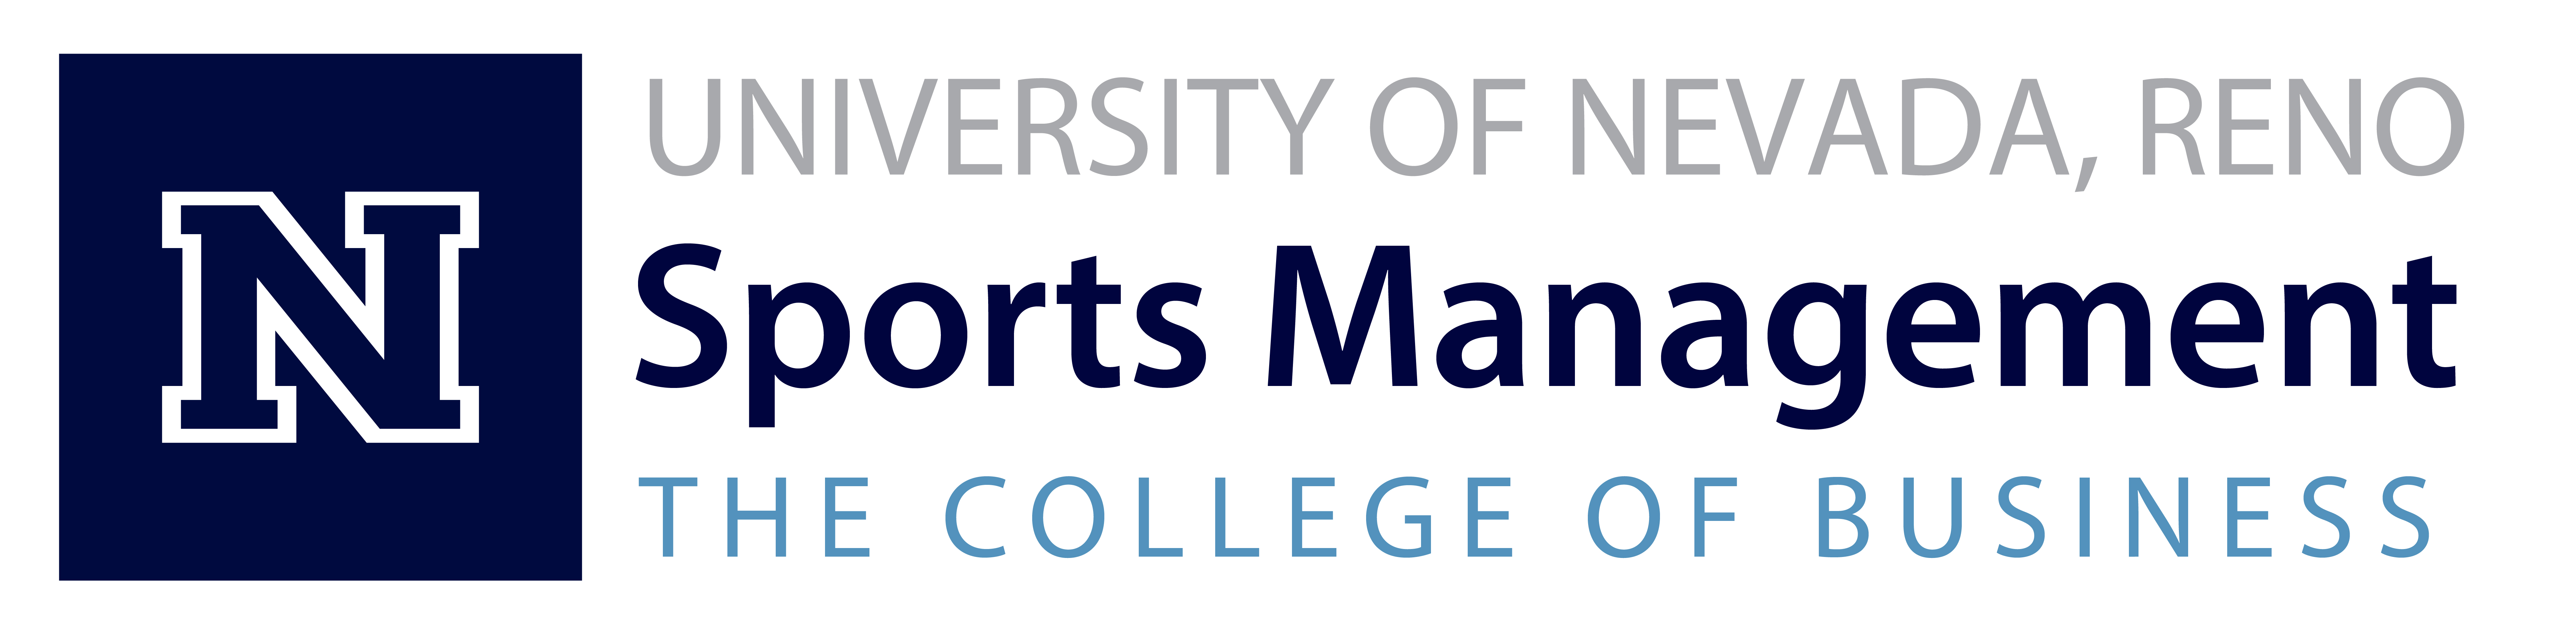 Sports Management logo